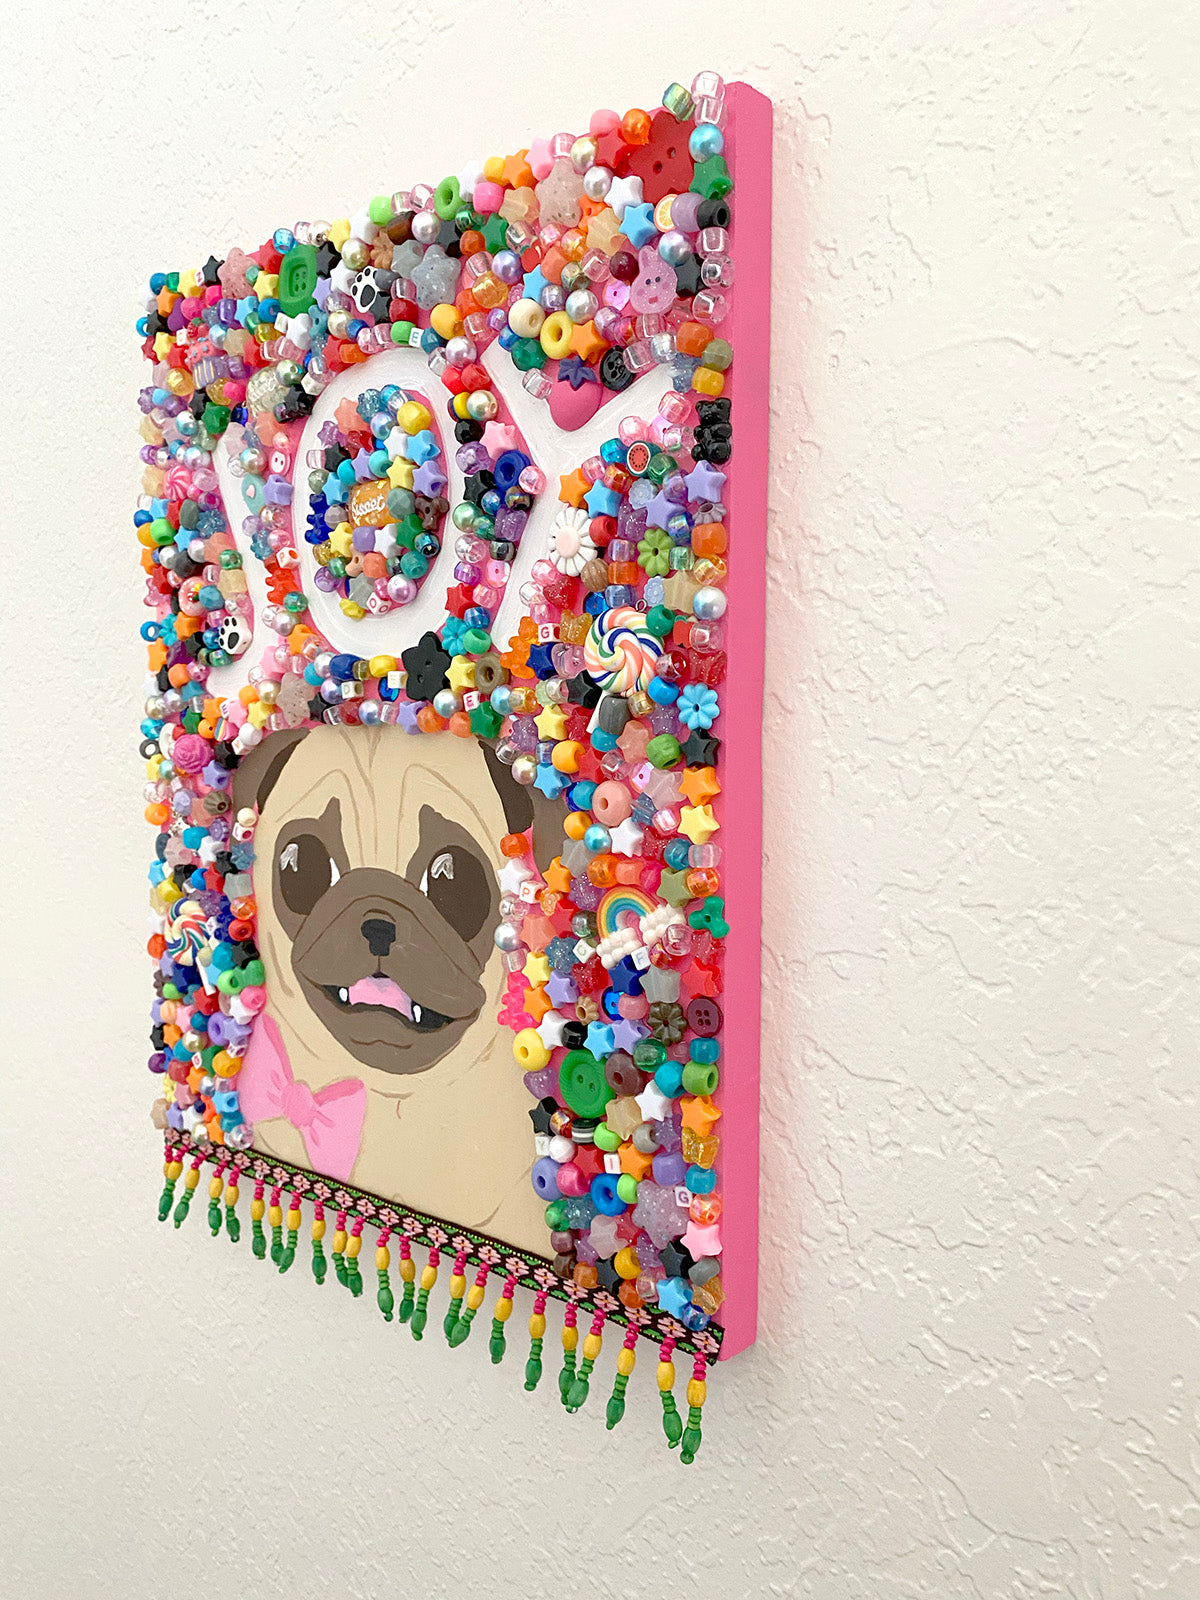 Joy Overflowing - Original Pug Painting